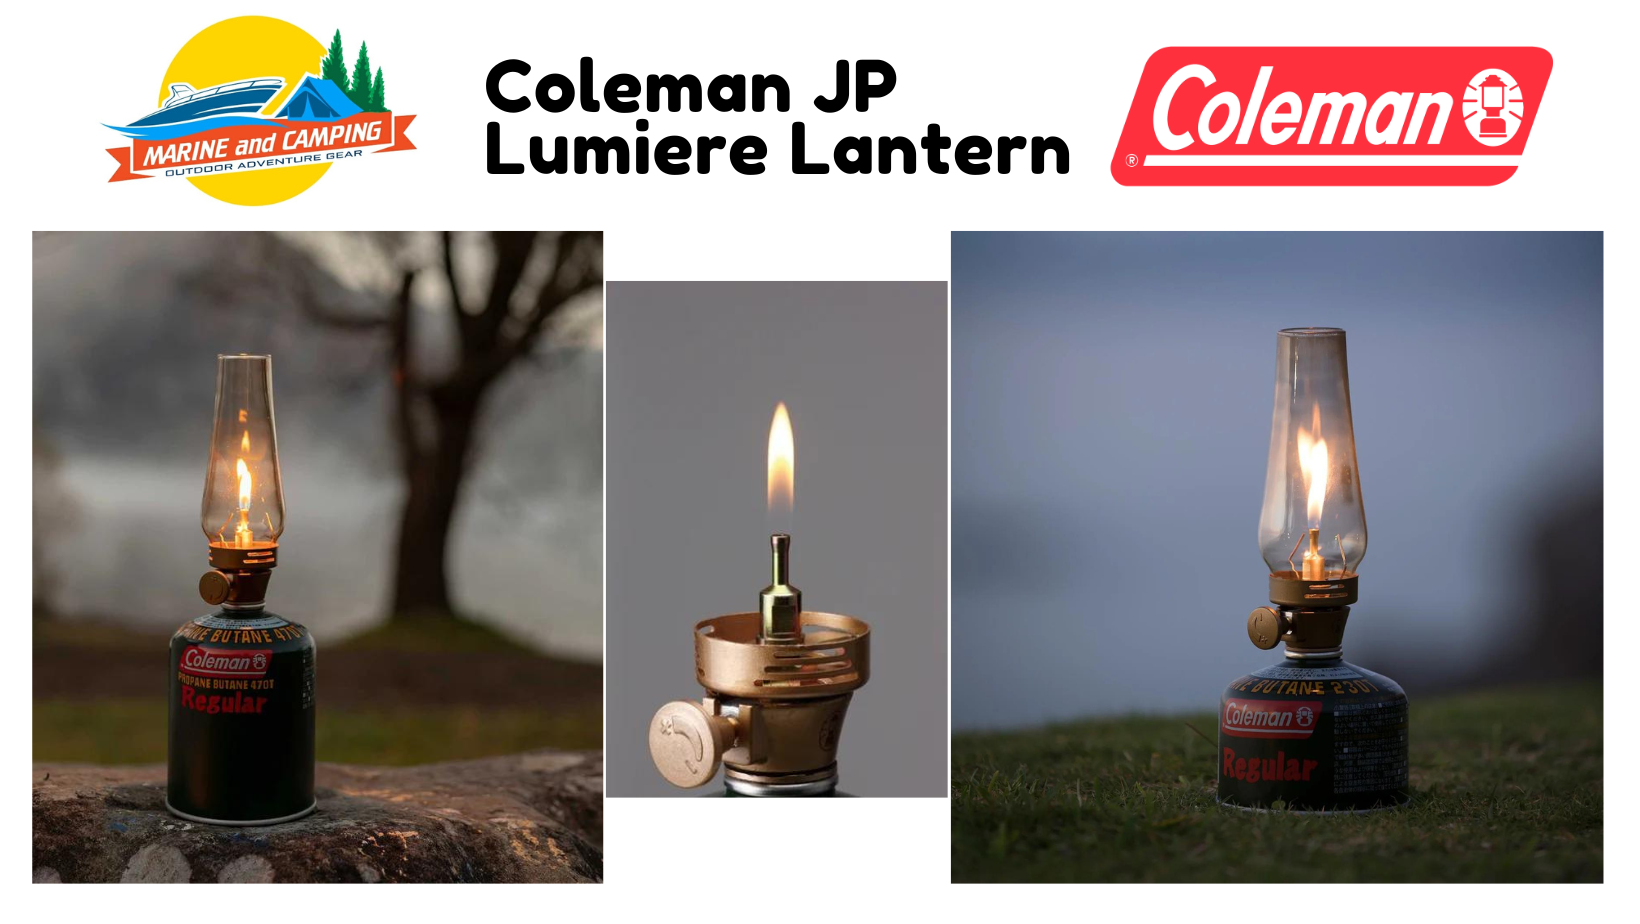 Coleman JP Lumiere Lantern ตะเกียงเปลวเทียน